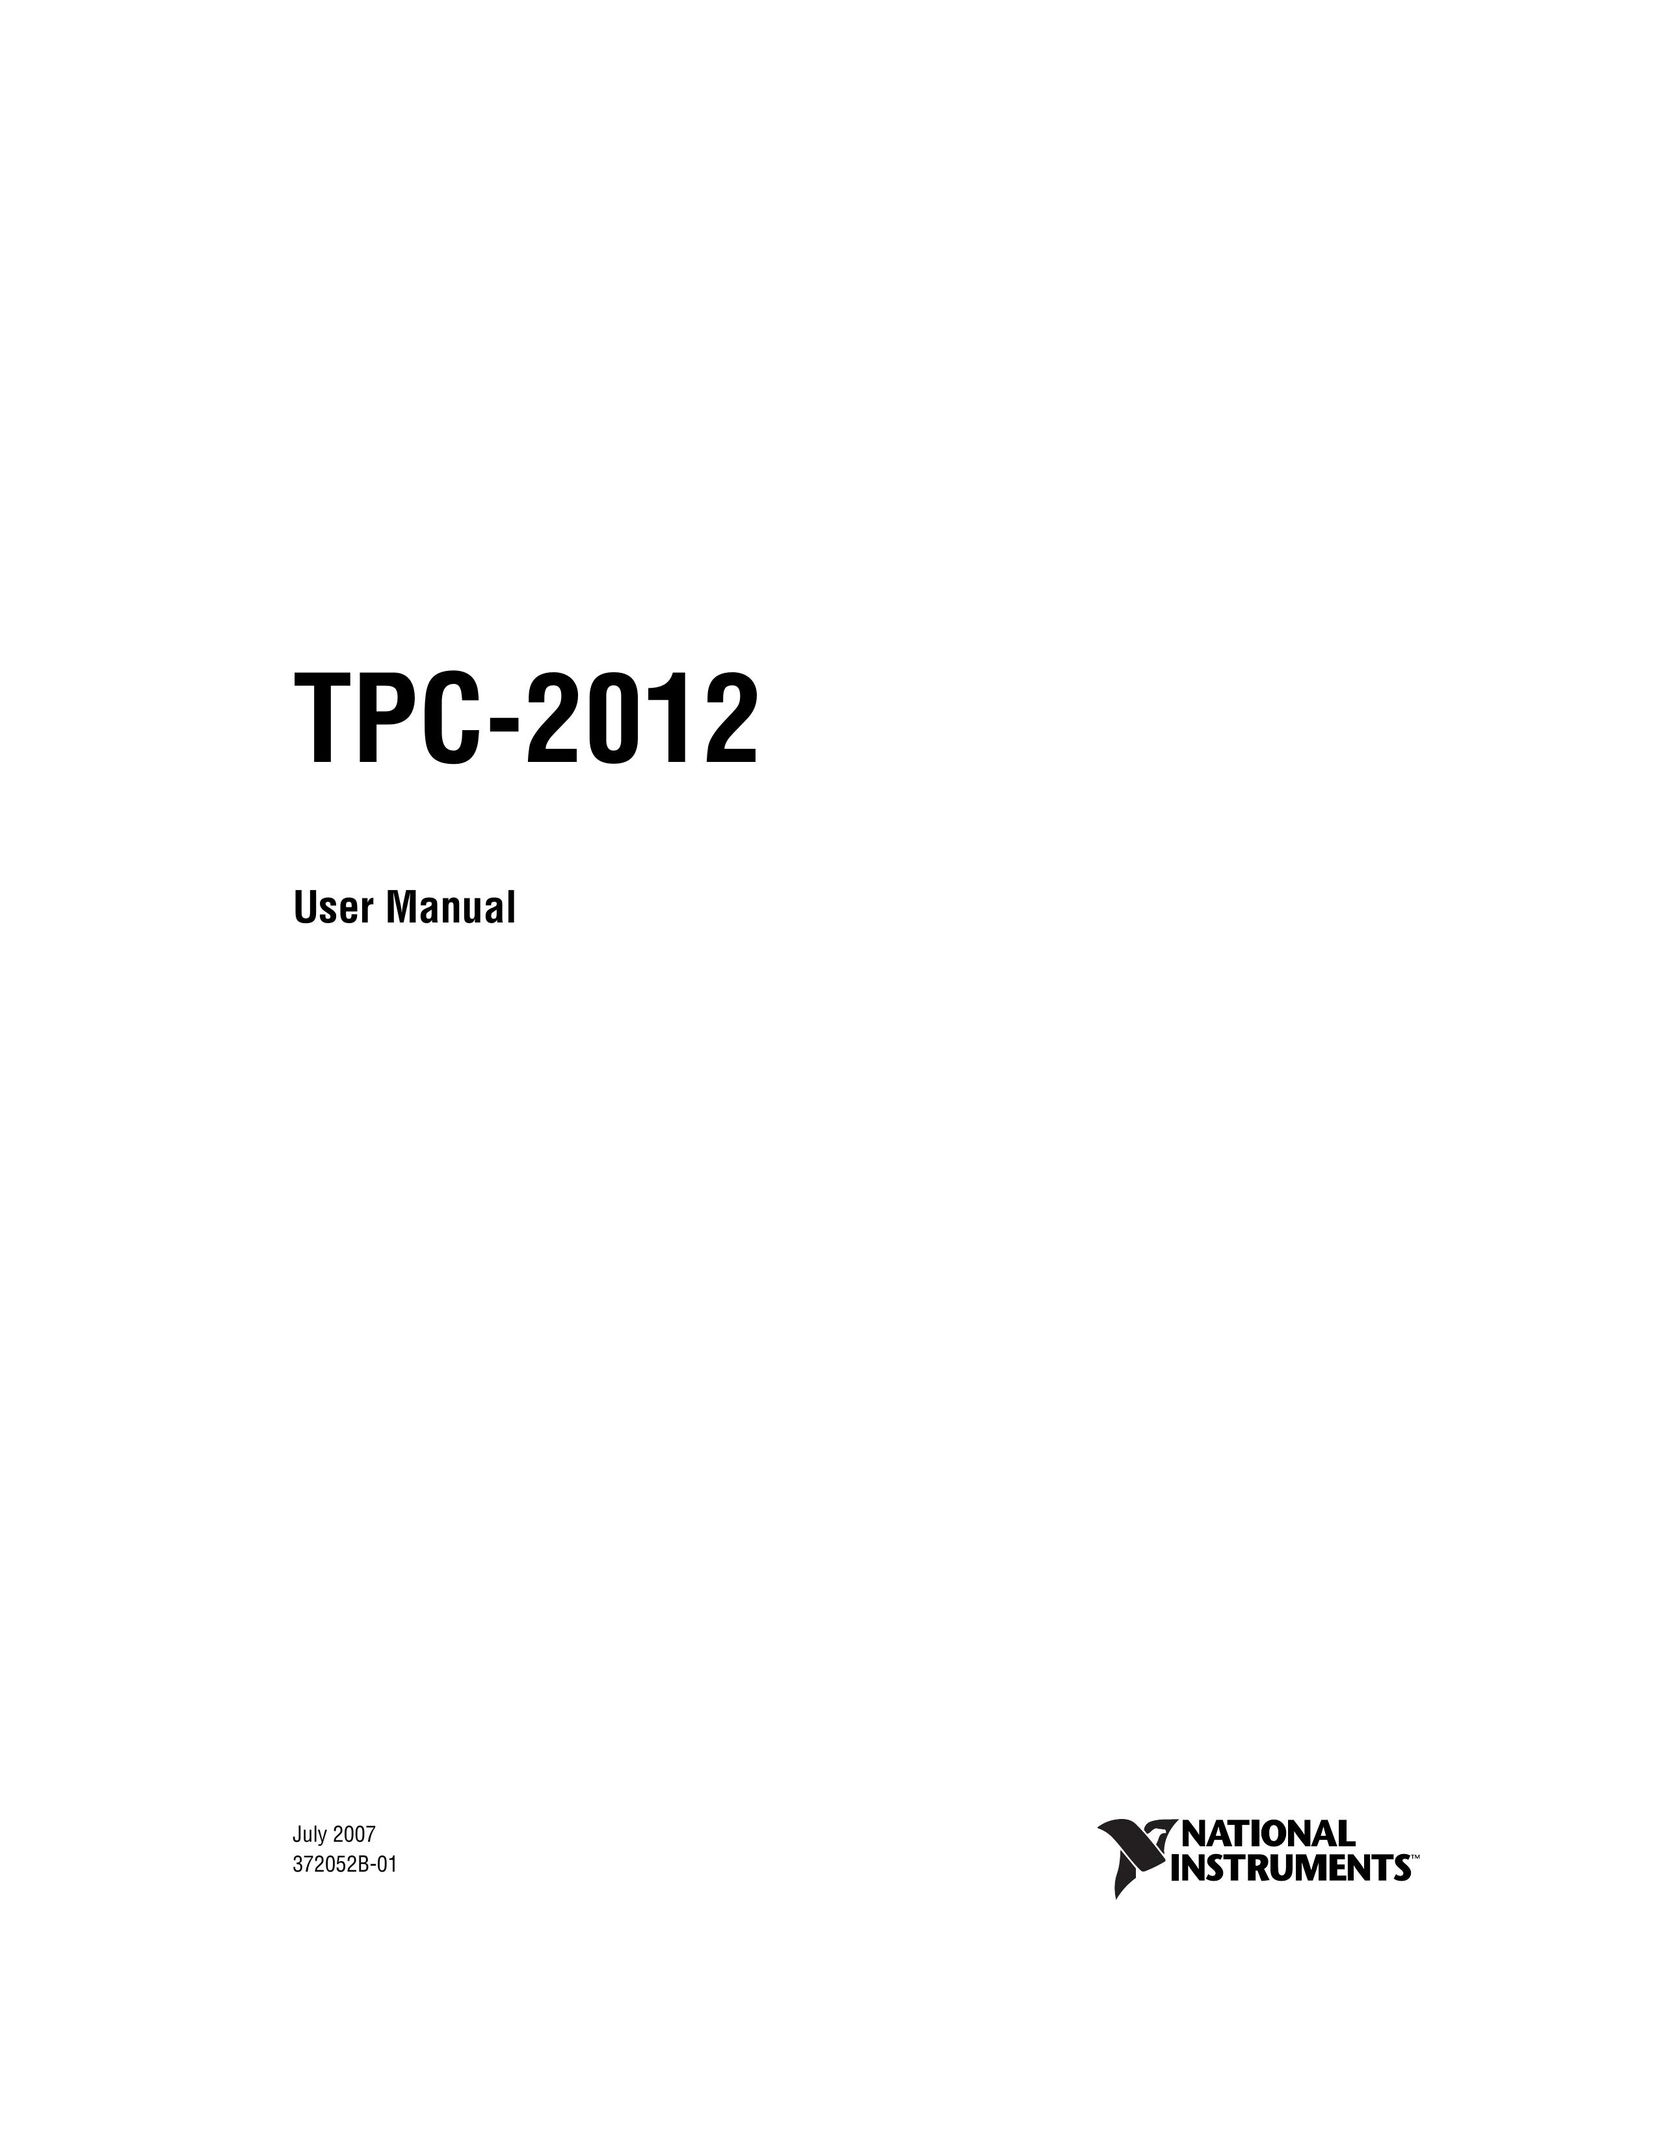 National Instruments TPC-2012 Personal Computer User Manual